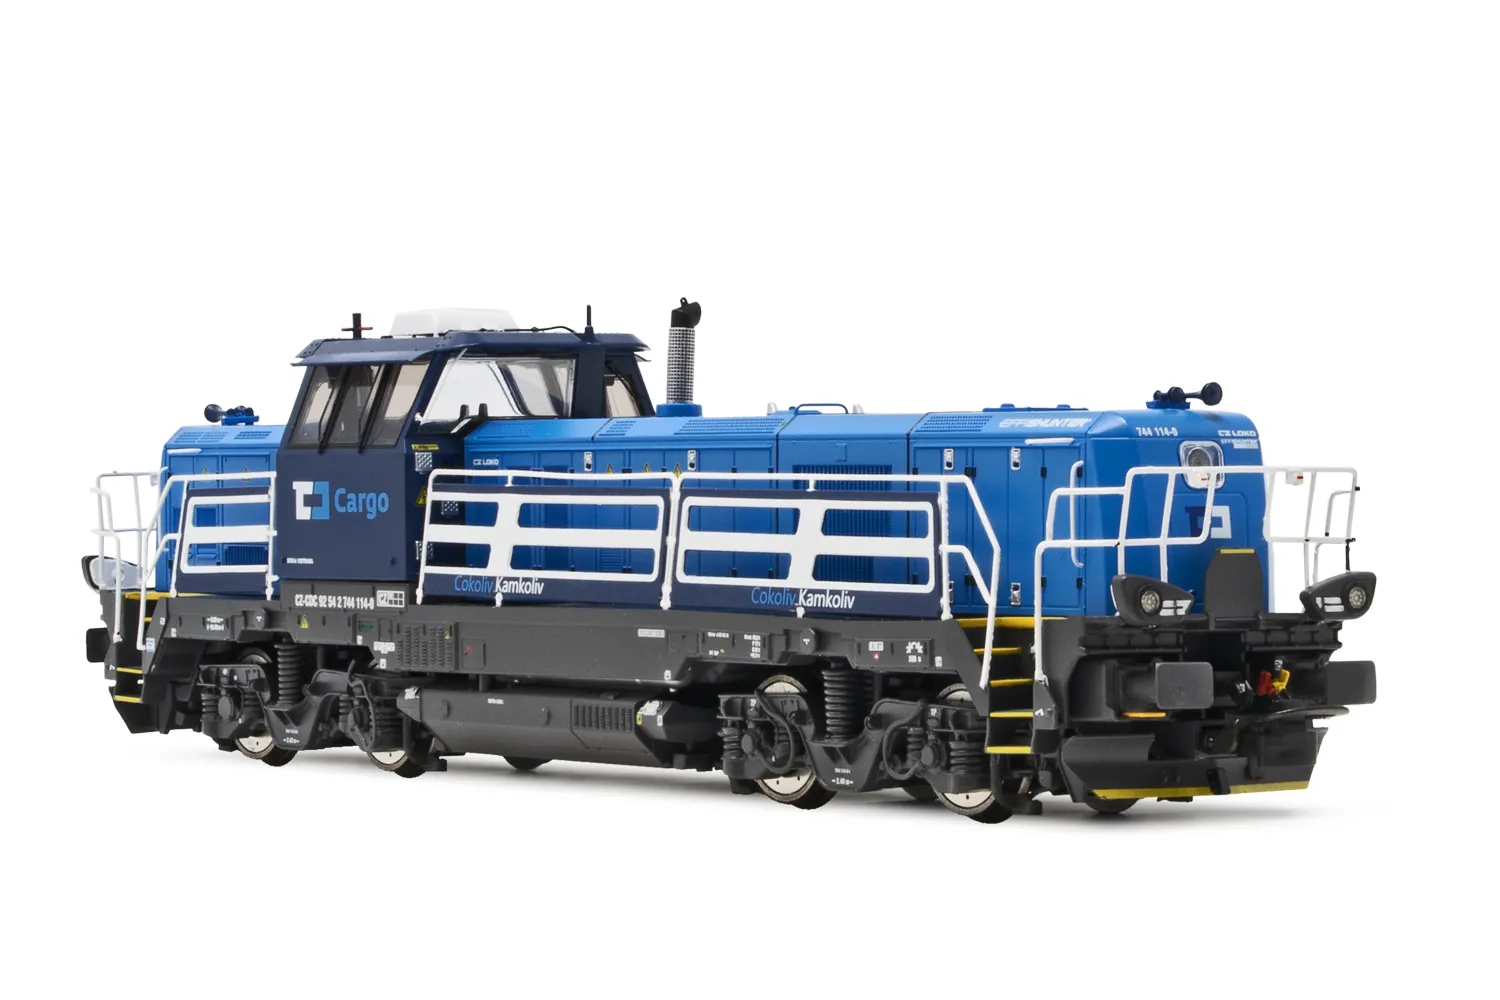 ČD Cargo, locomotiva diesel da manovra EffiShunter 1000, livrea azzurra/blu, ep. VI, con DCC Sound decoder